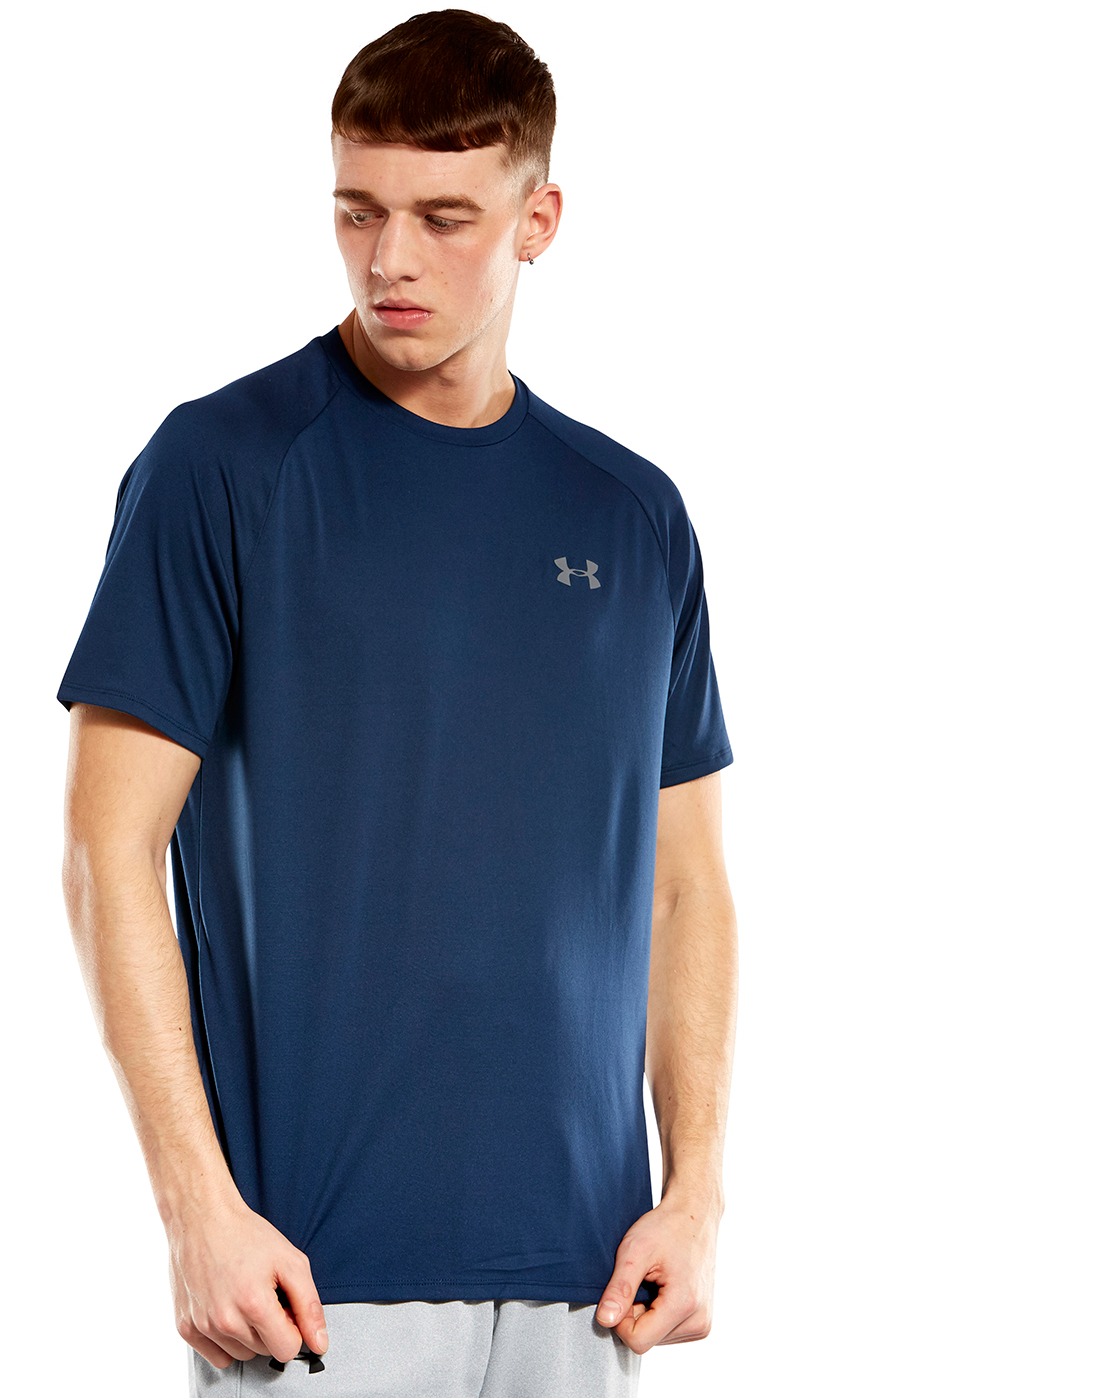 Men's Navy Blue Under Armour Tech T-Shirt | Life Style Sports